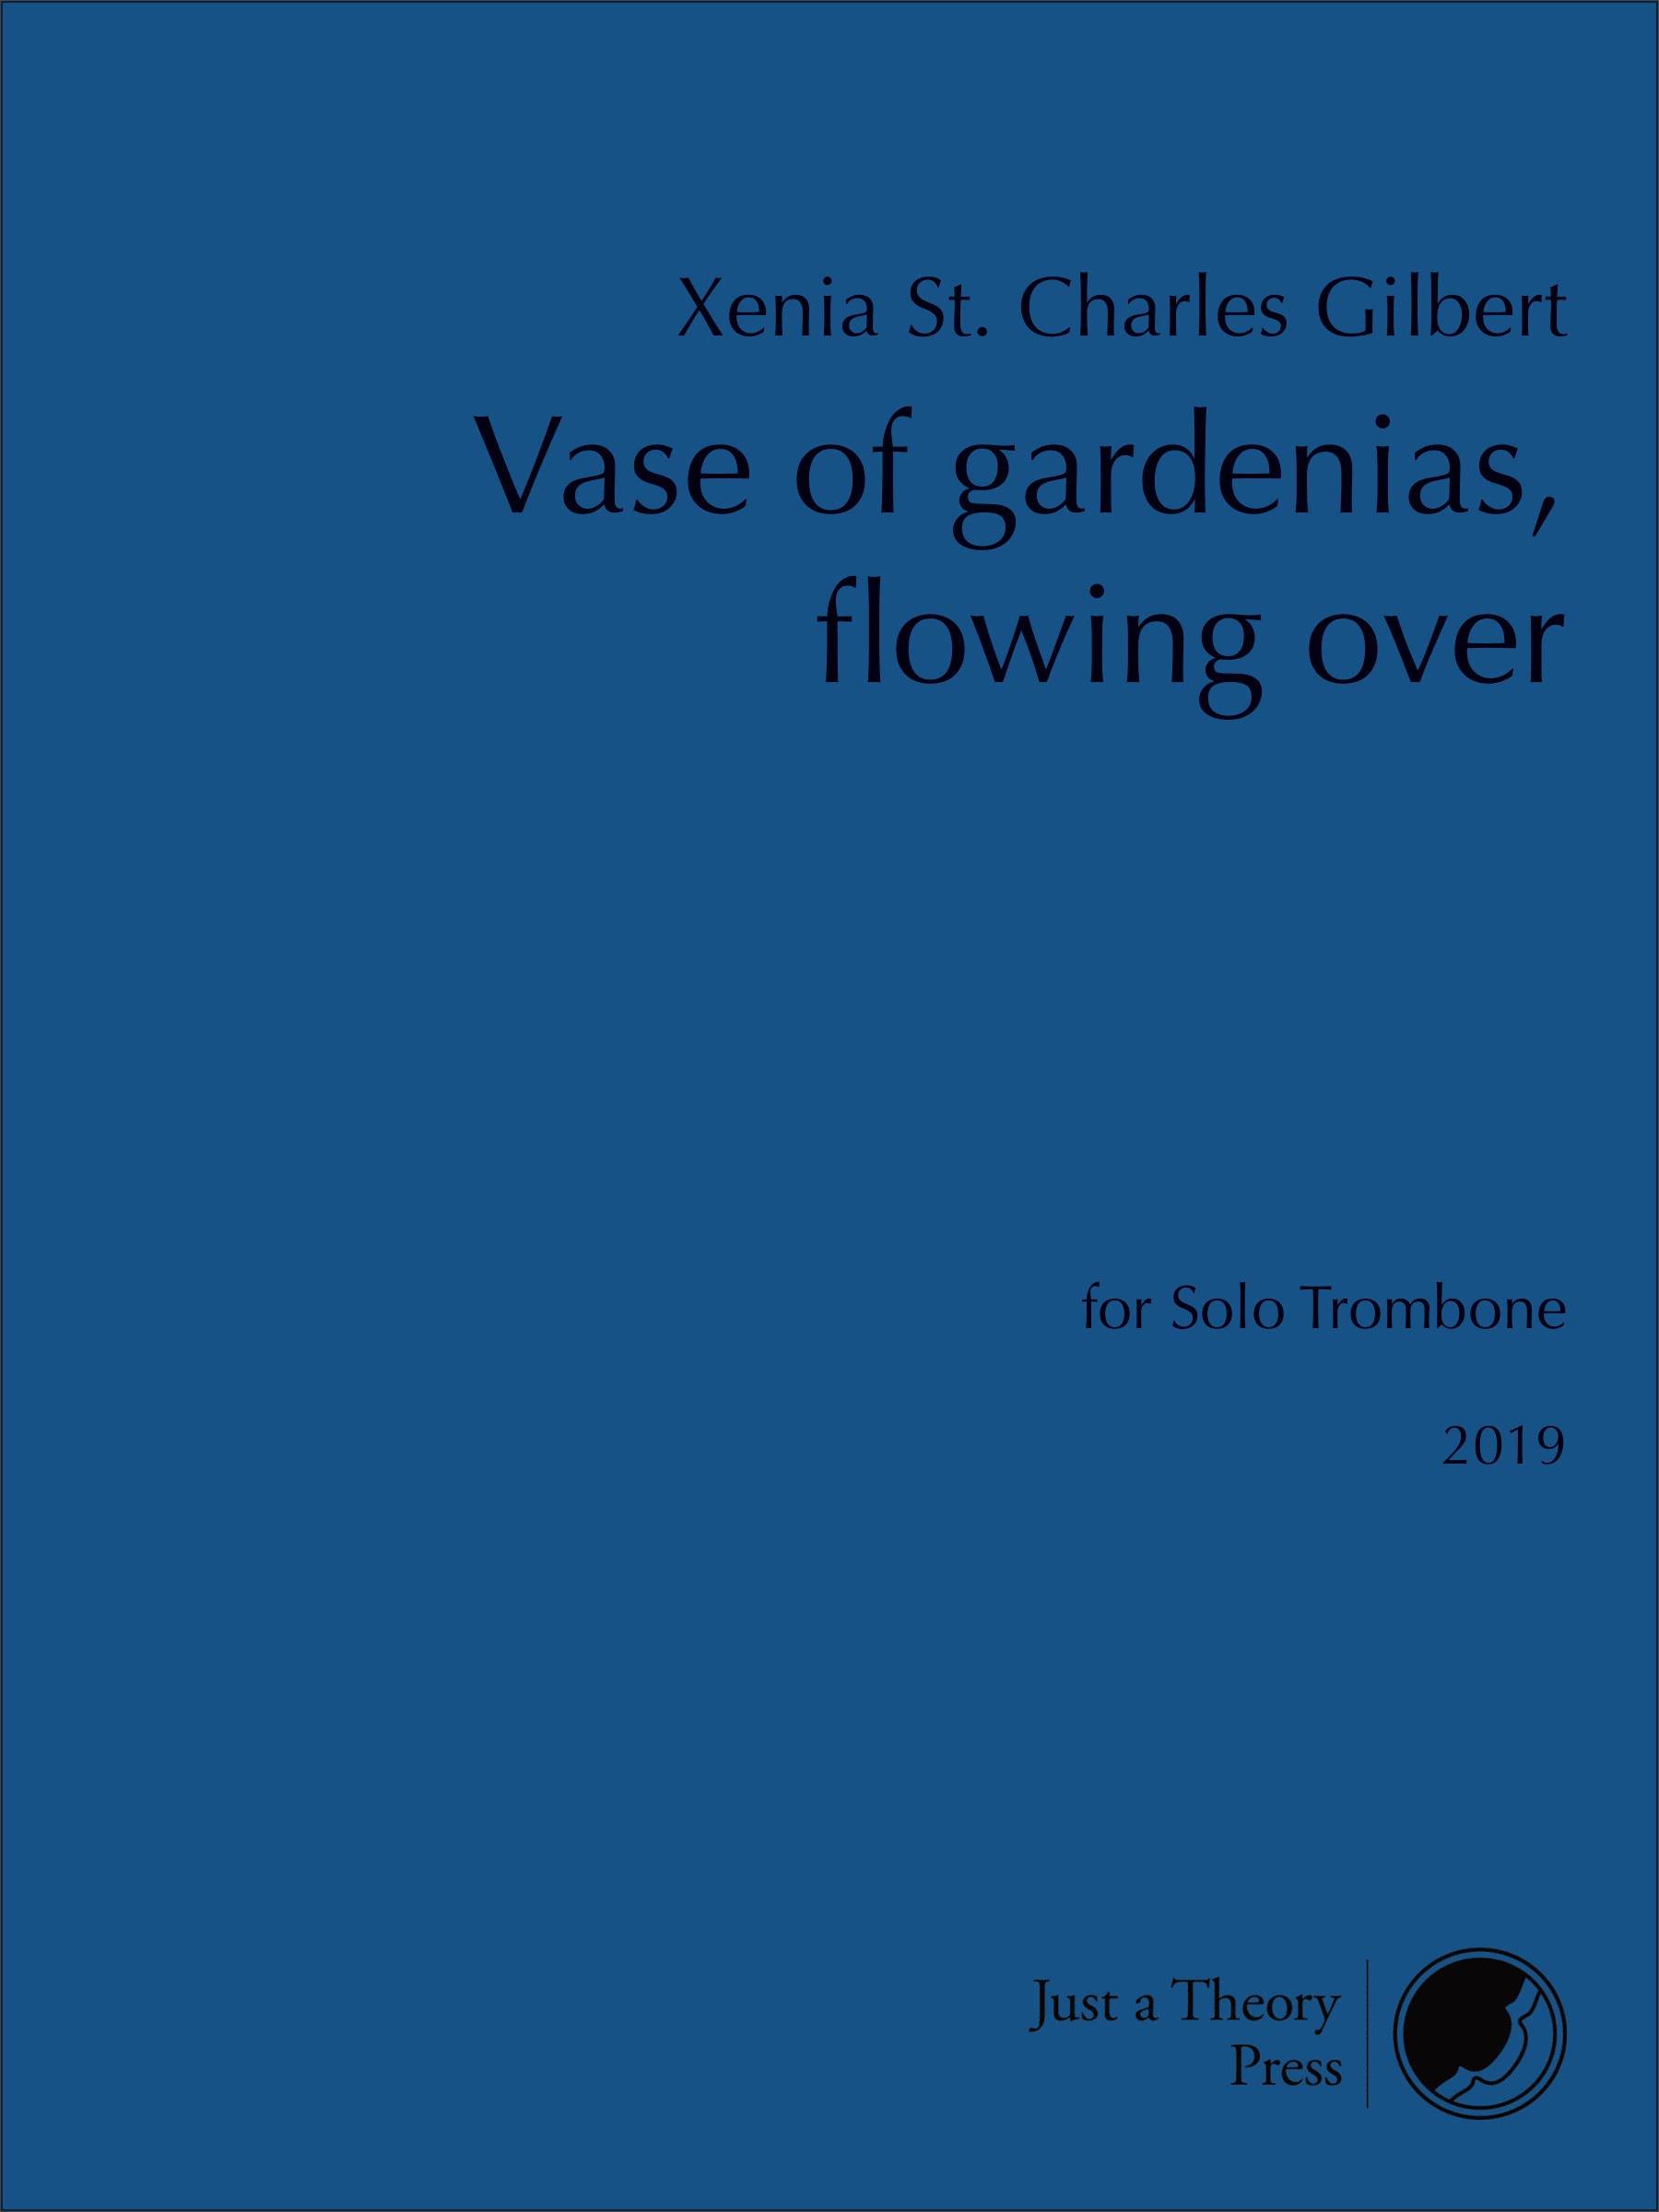 Vase of gardenias, flowing over